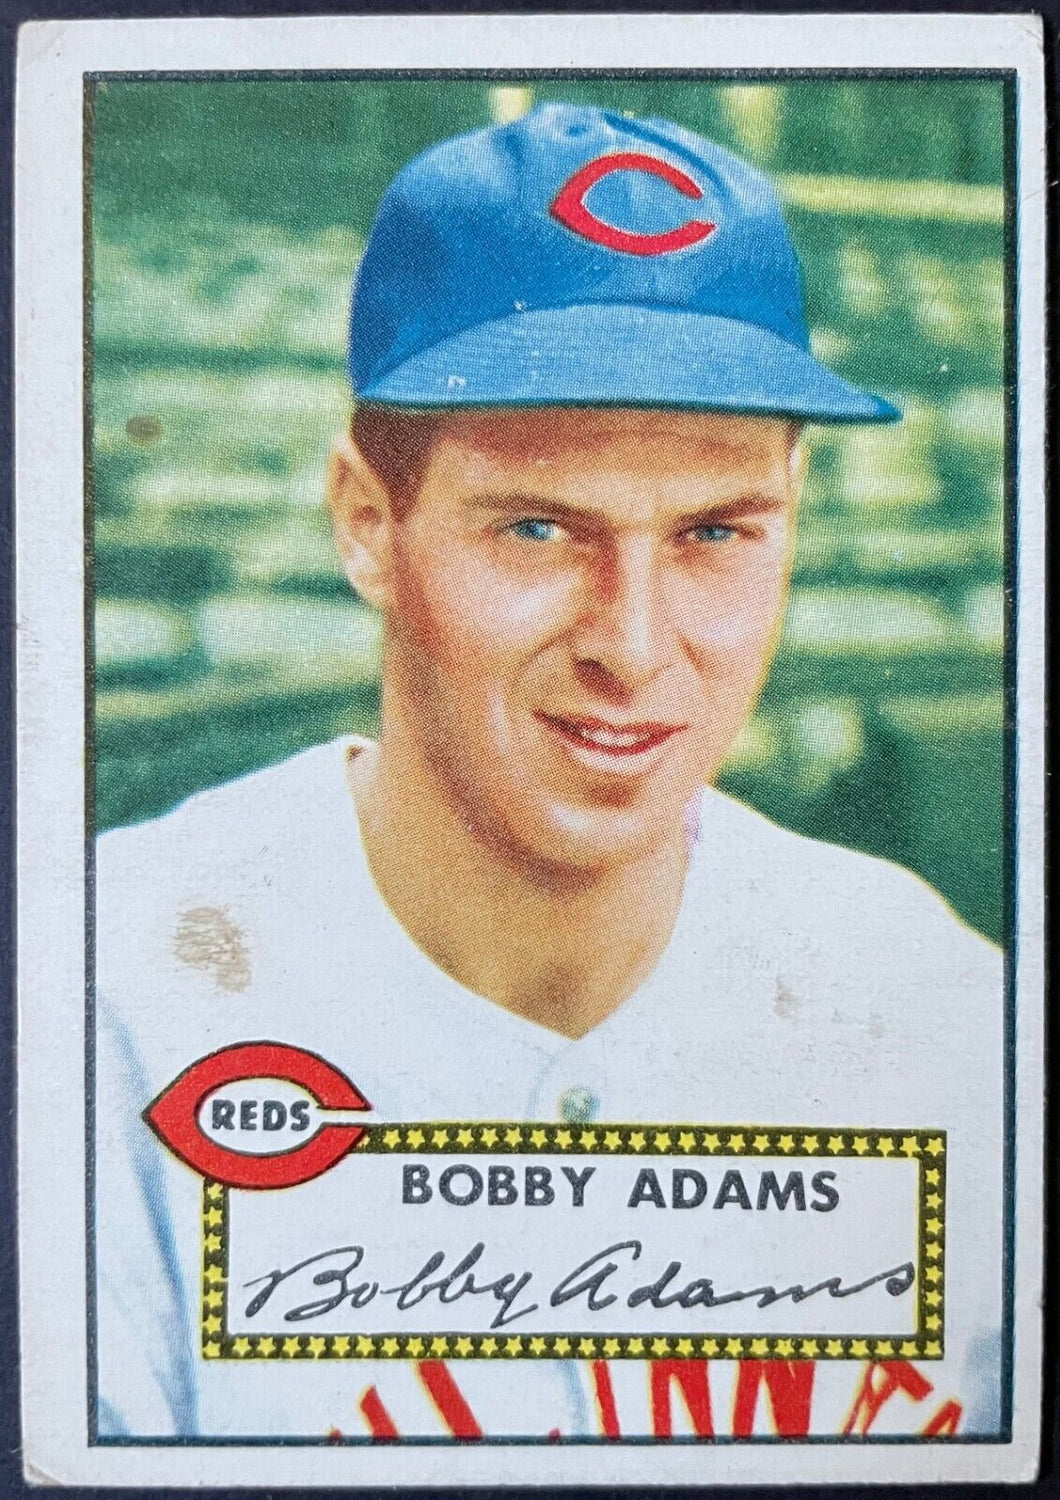 1952 Topps Baseball JBobby Adams #249 Cincinnati Reds MLB Card Vintage